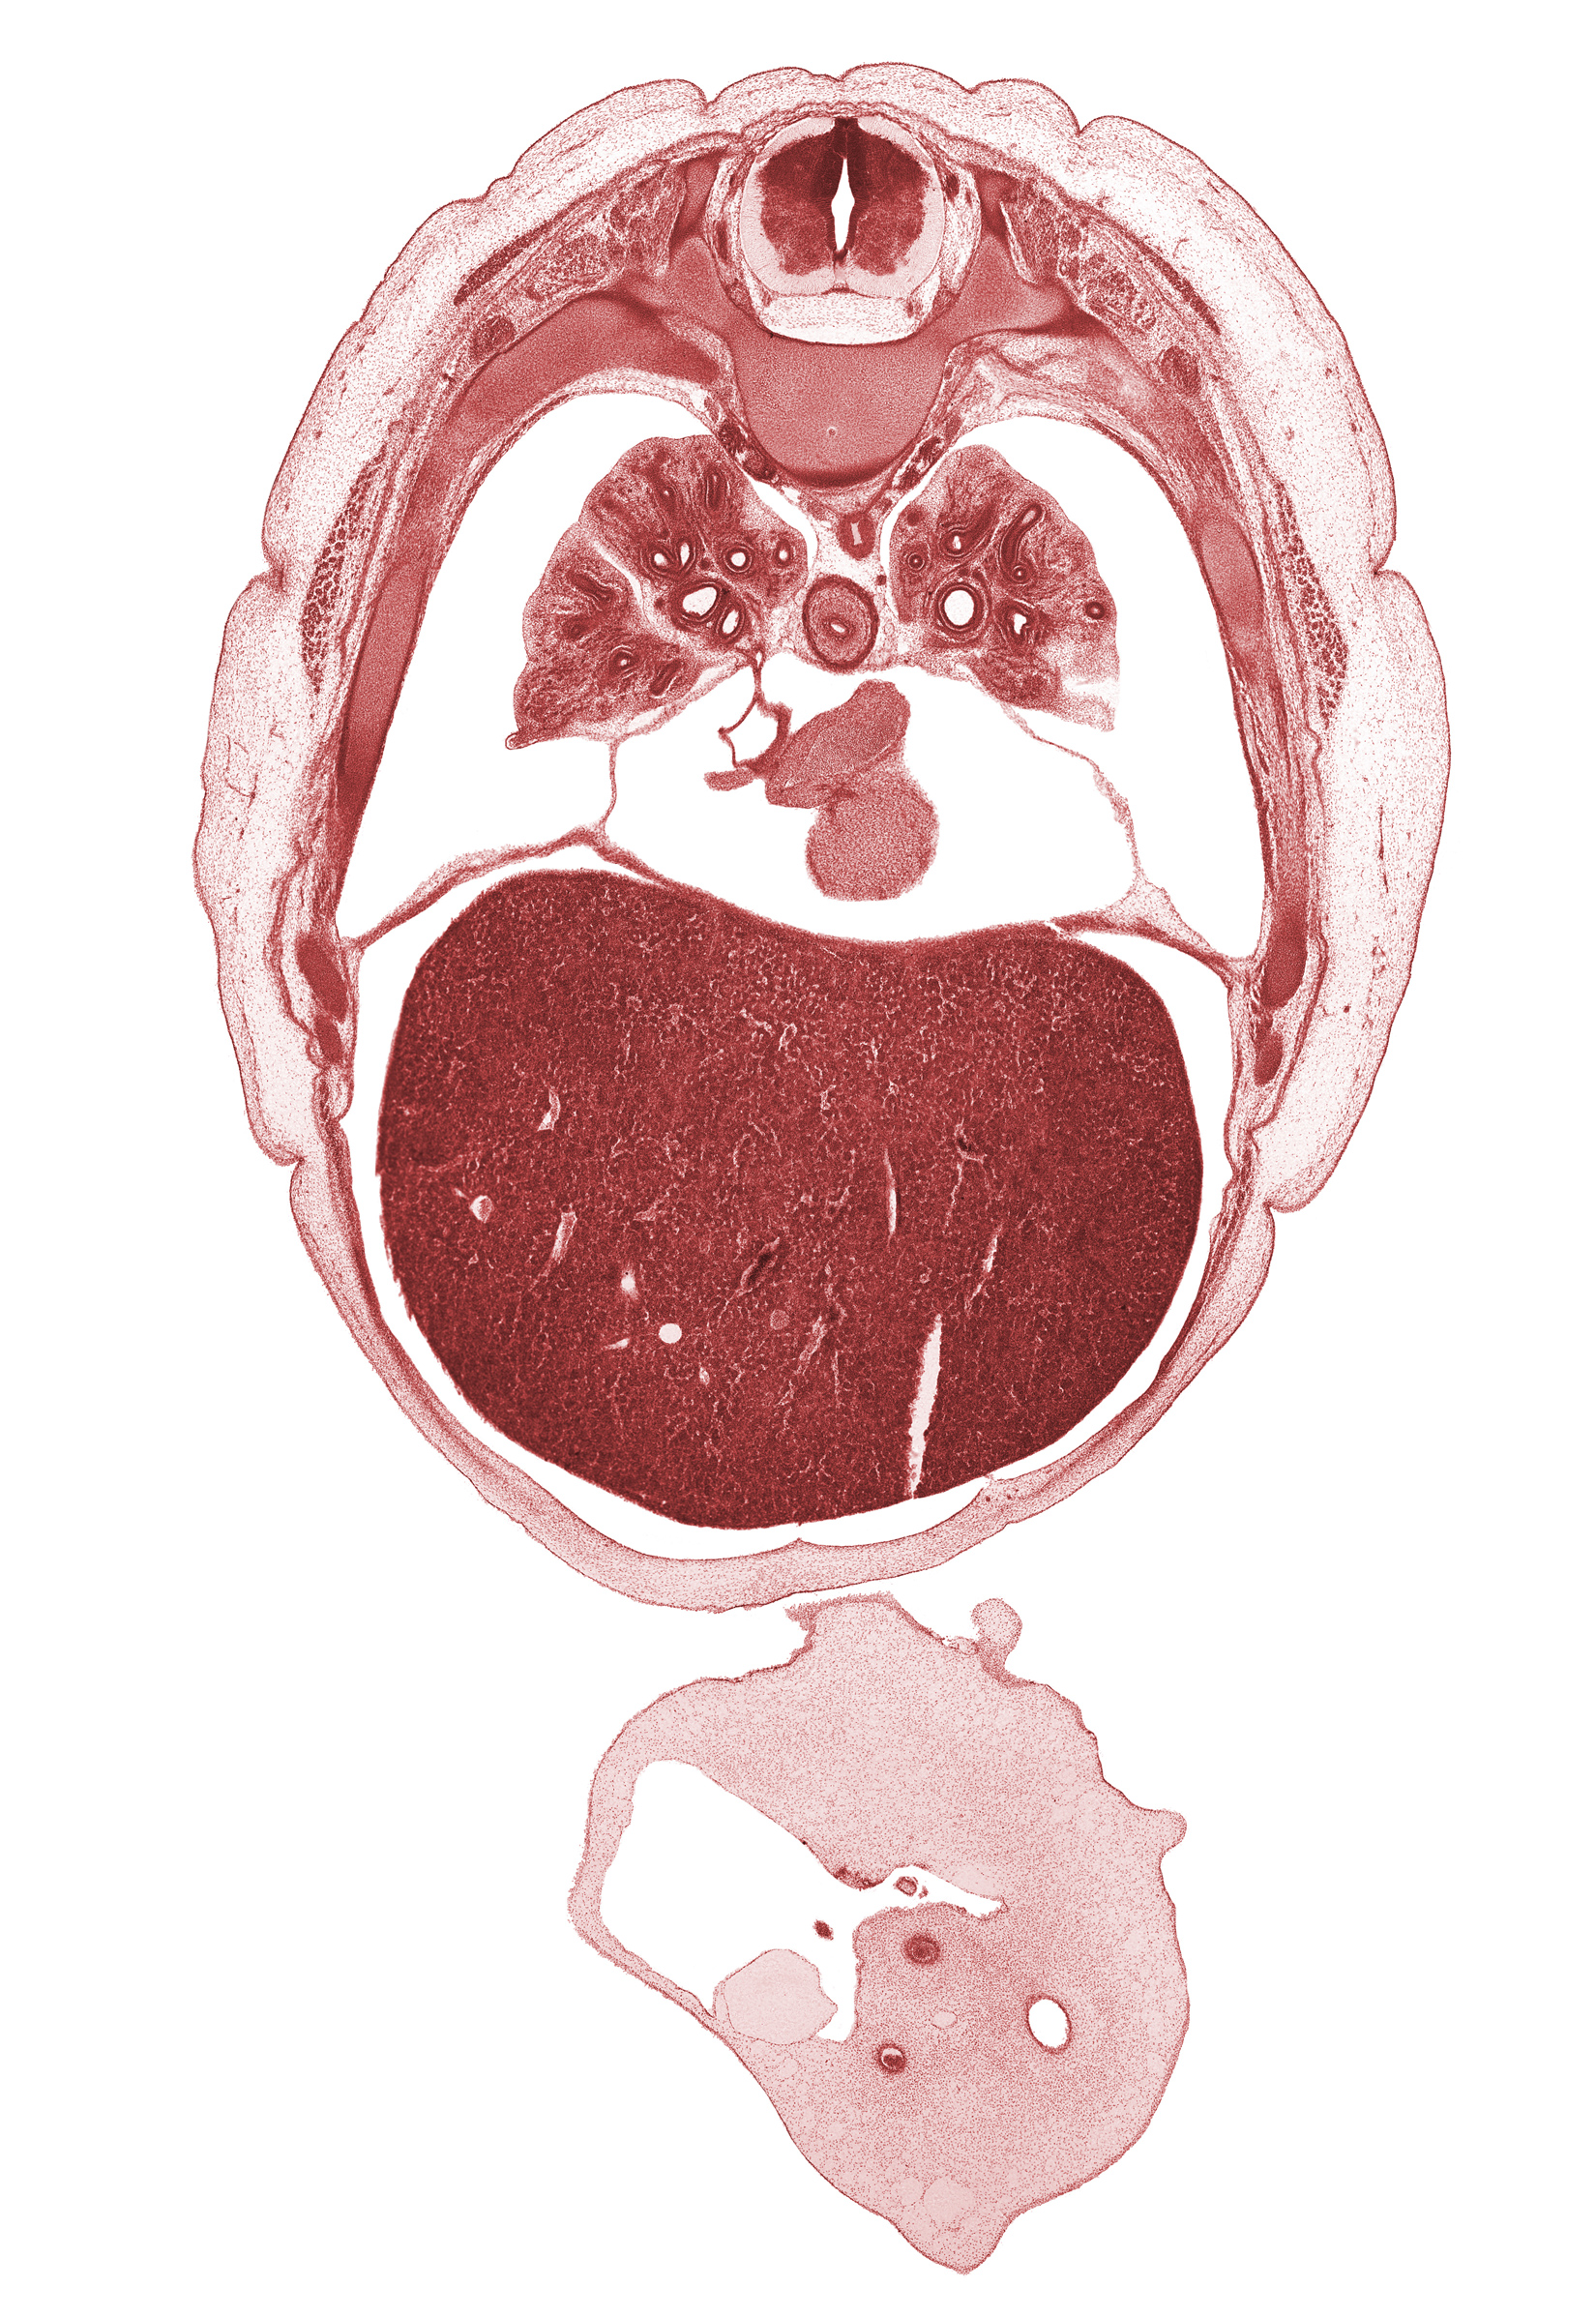 L-5 ventral primary ramus, T-5 / T-6 interganglion region, T-6 intercostal nerve, allantois, caudal edge of lingula of upper lobe of left lung, external abdominal oblique muscle, inferior vena cava, left umbilical artery, left ventricle, liver prominence, lower lobe of right lung, middle lobe of right lung, oblique fissure, peritoneal cavity, rib 7, rib 8, rib 9, right atrium, right lower pulmonary vein, right umbilical artery, sympathetic trunk, umbilical coelom, umbilical vein